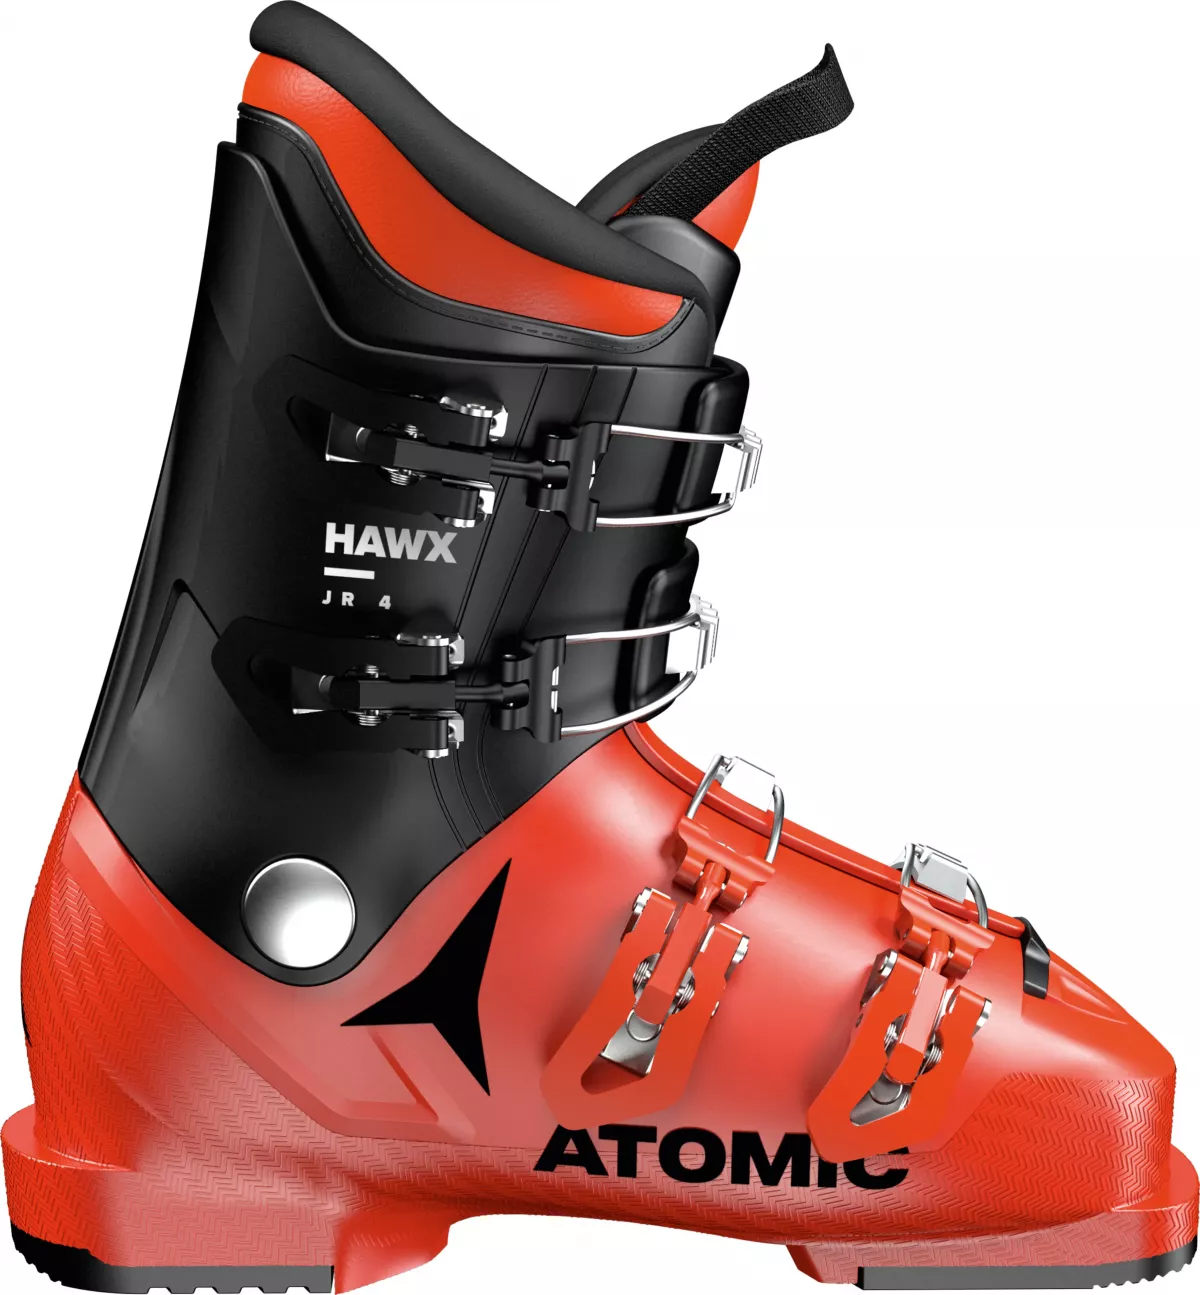 Atomic Hawx Jr 4 sícipő, red-black 2022/2023